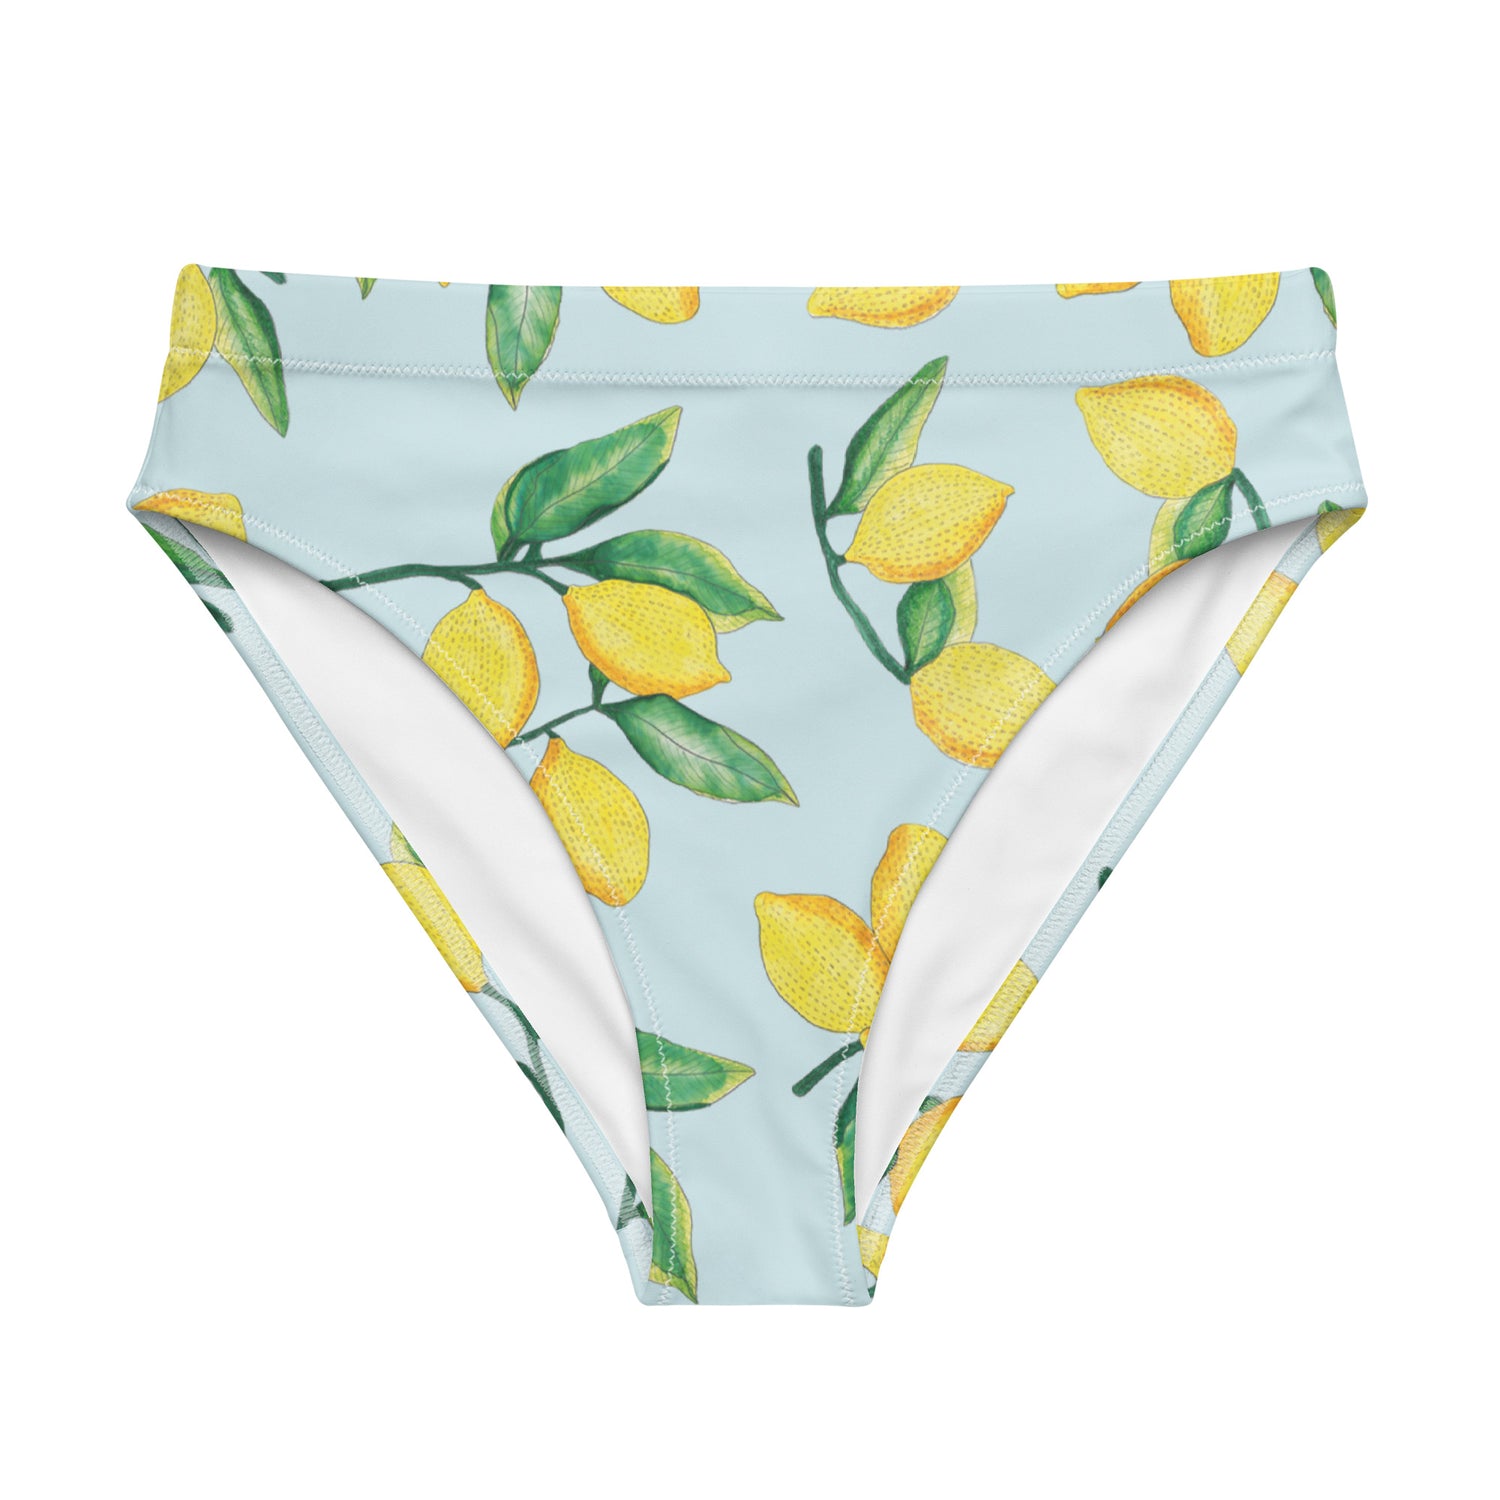 When Life Gives Lemons Recycled High-waisted Bikini Bottom